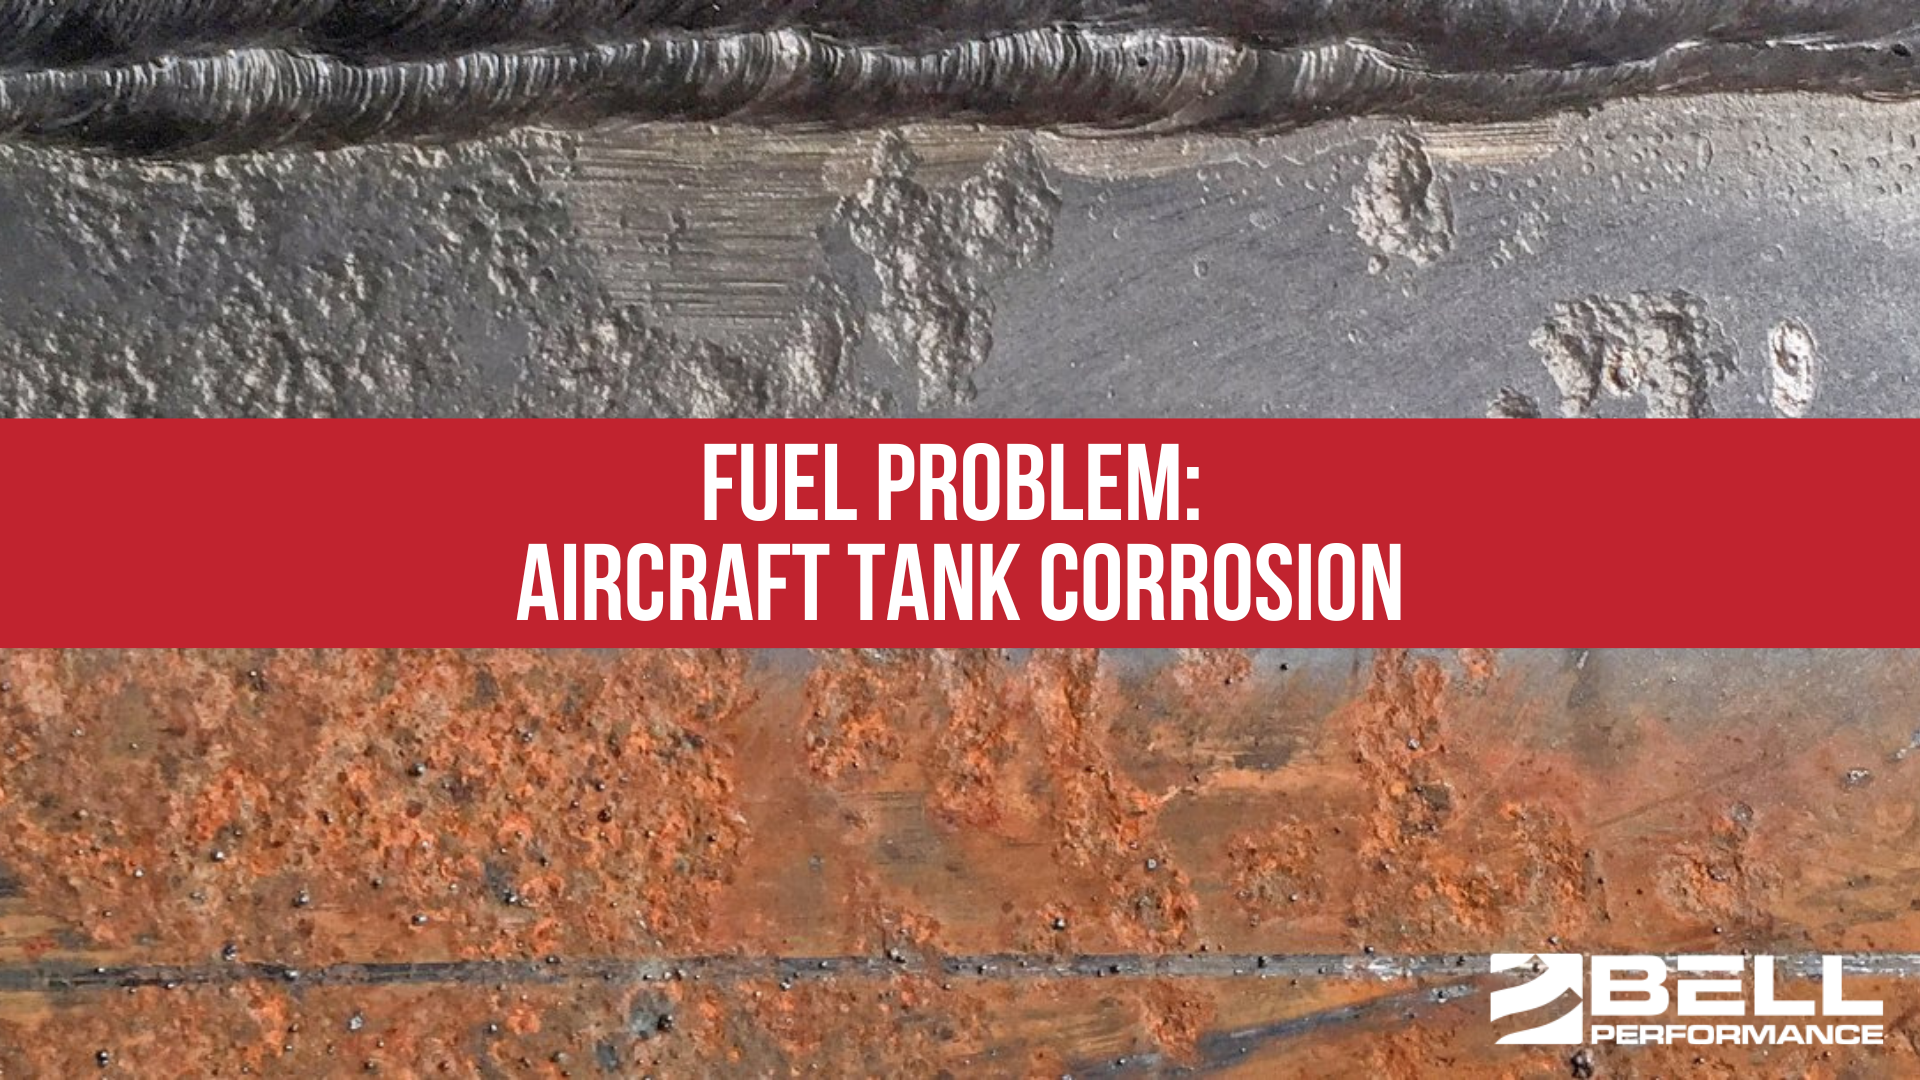 Fuel Problem: Aircraft Tank Corrosion